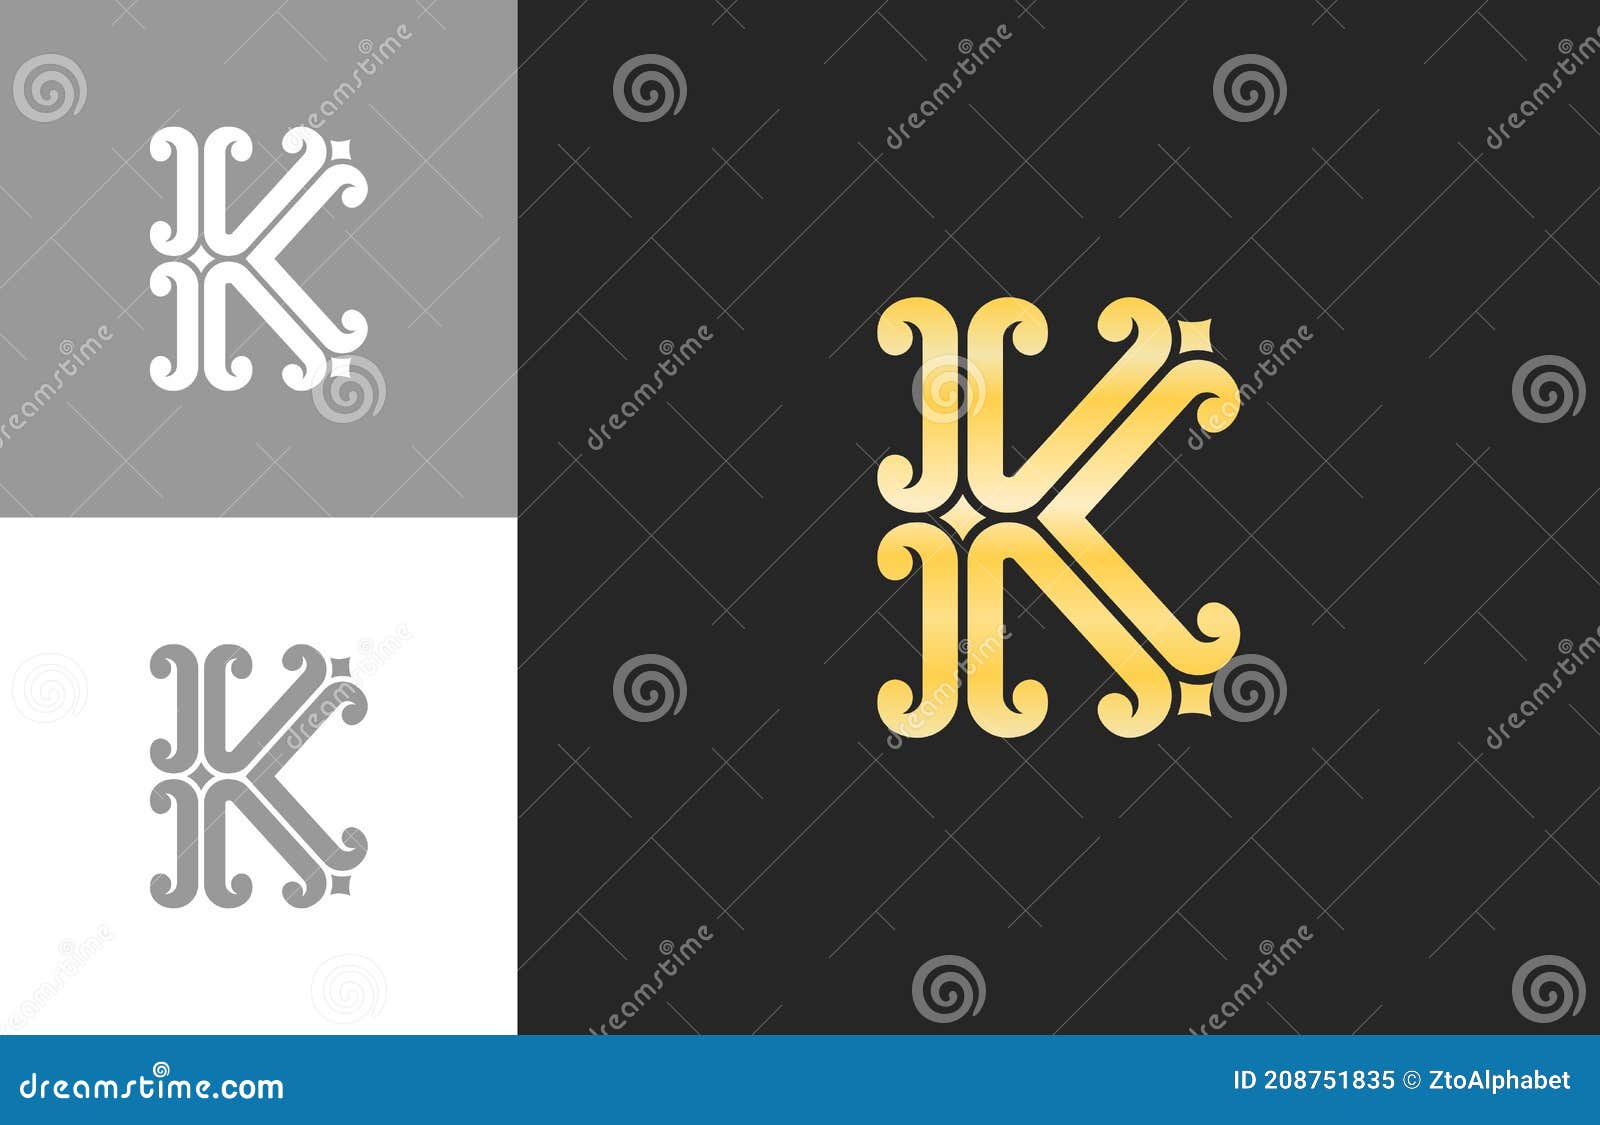 monogram letter k company name logo